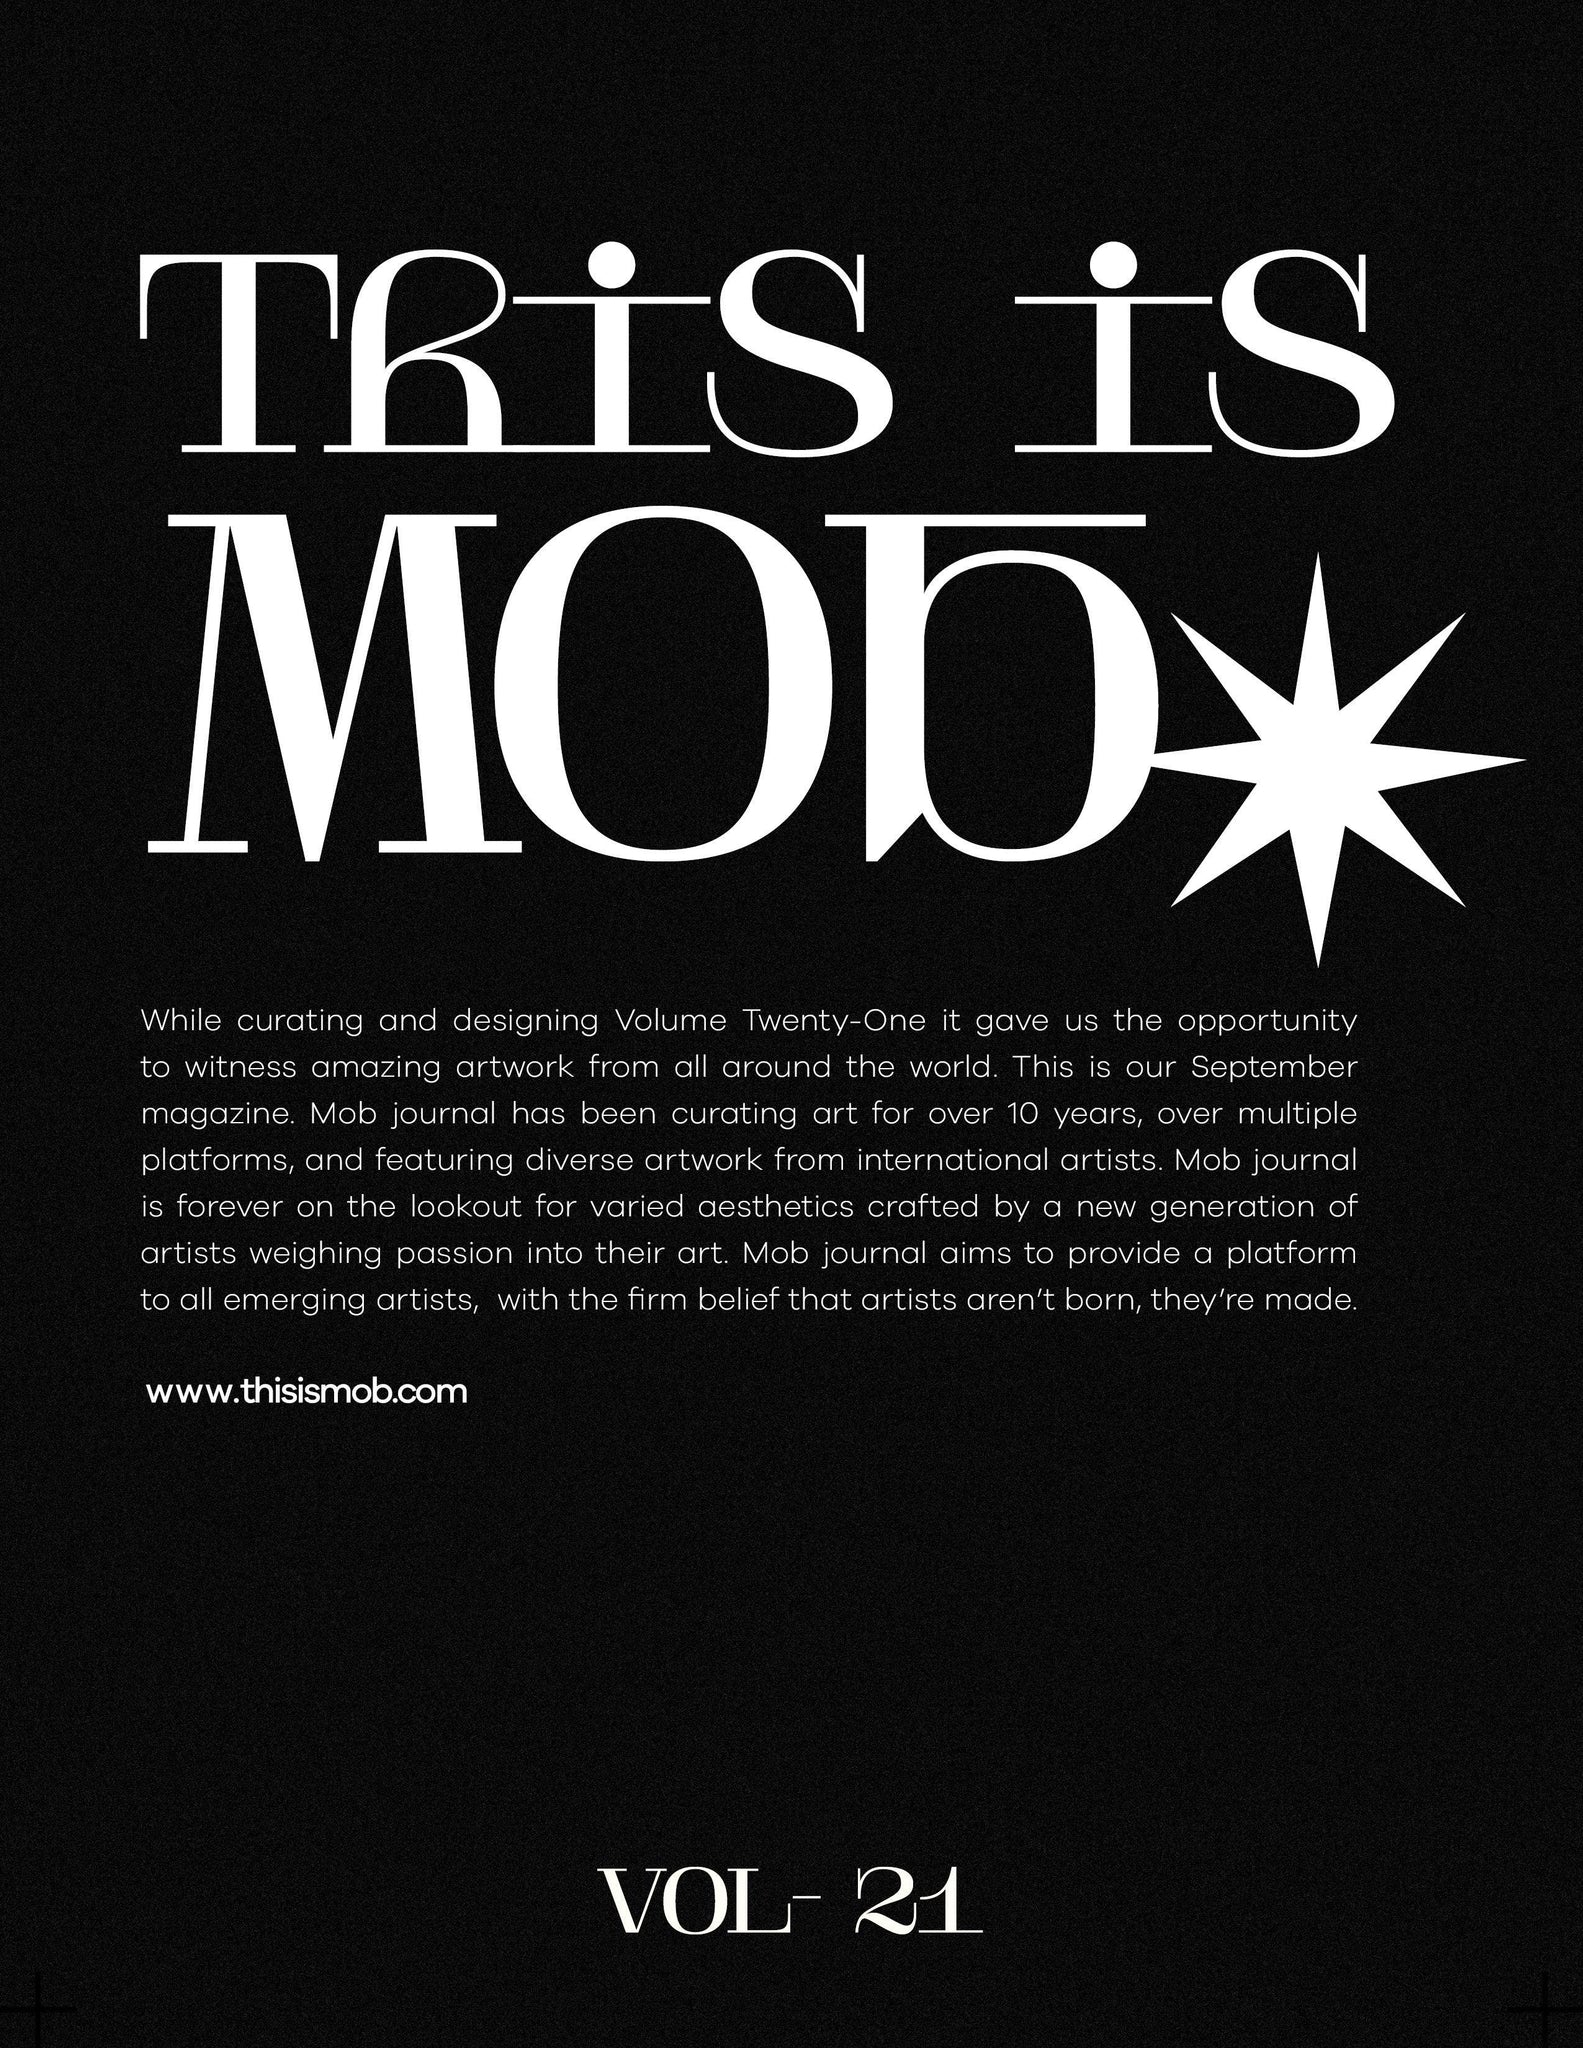 MOB JOURNAL | VOLUME TWENTY ONE | ISSUE #49 - Mob Journal